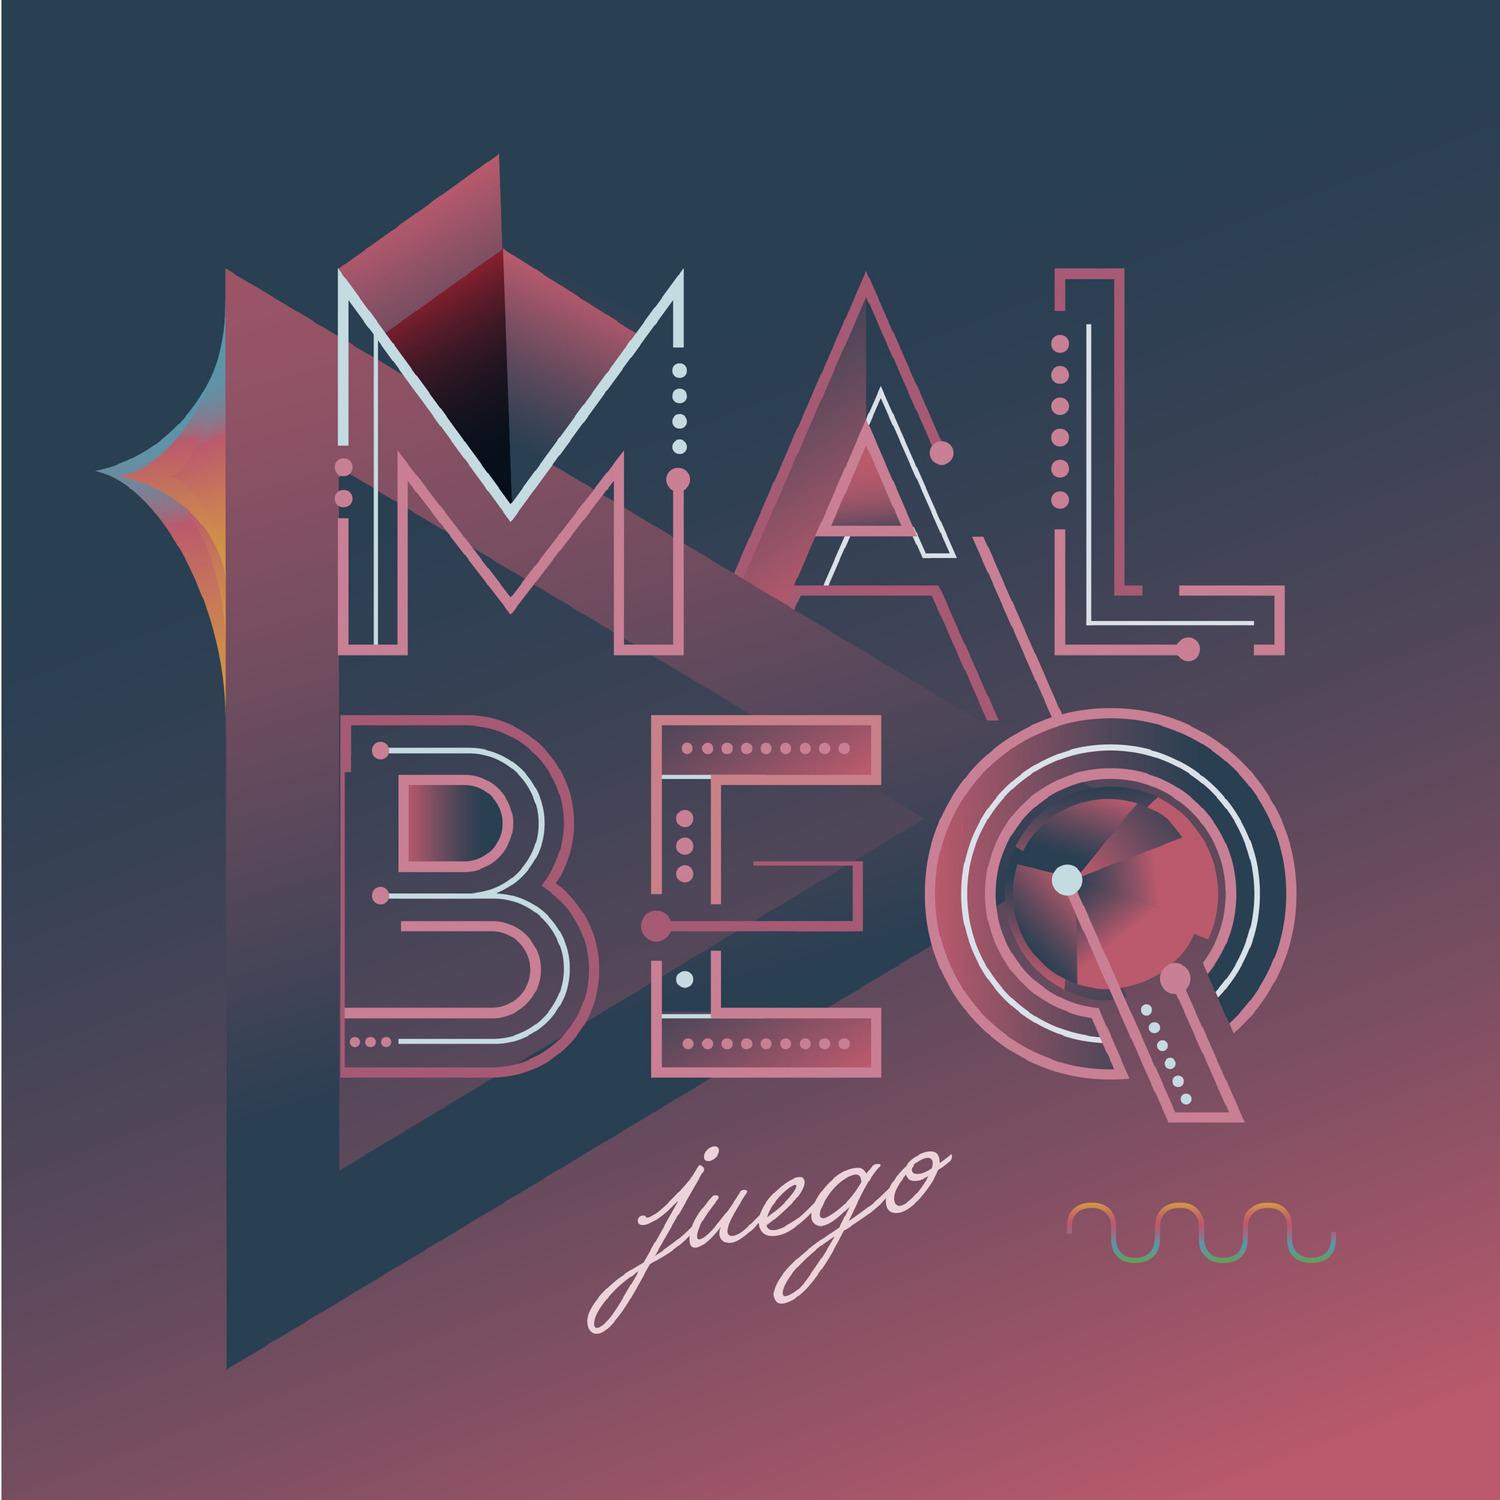 Malbeq - Can'd